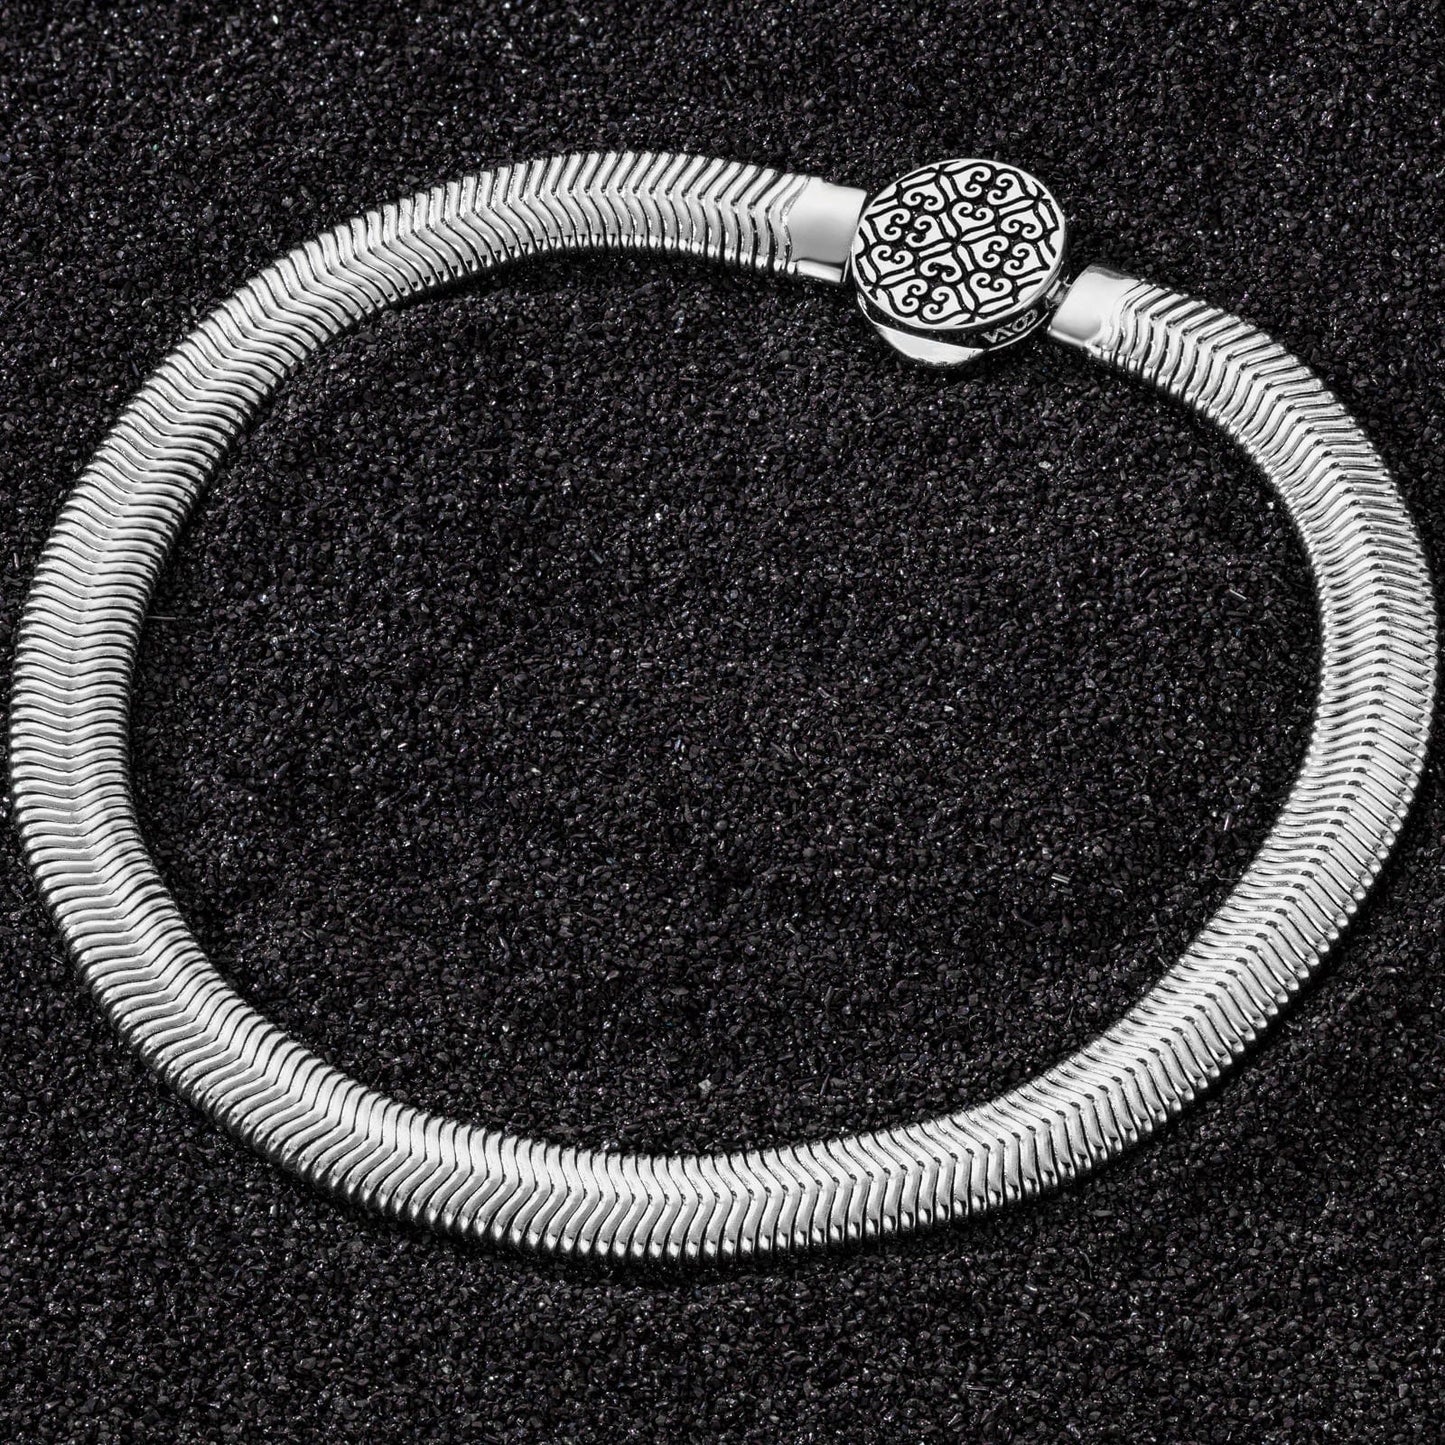 Sterling Silver Rectangular Charms Bracelet Flat Snake Chain Bracelet In Silver Plated